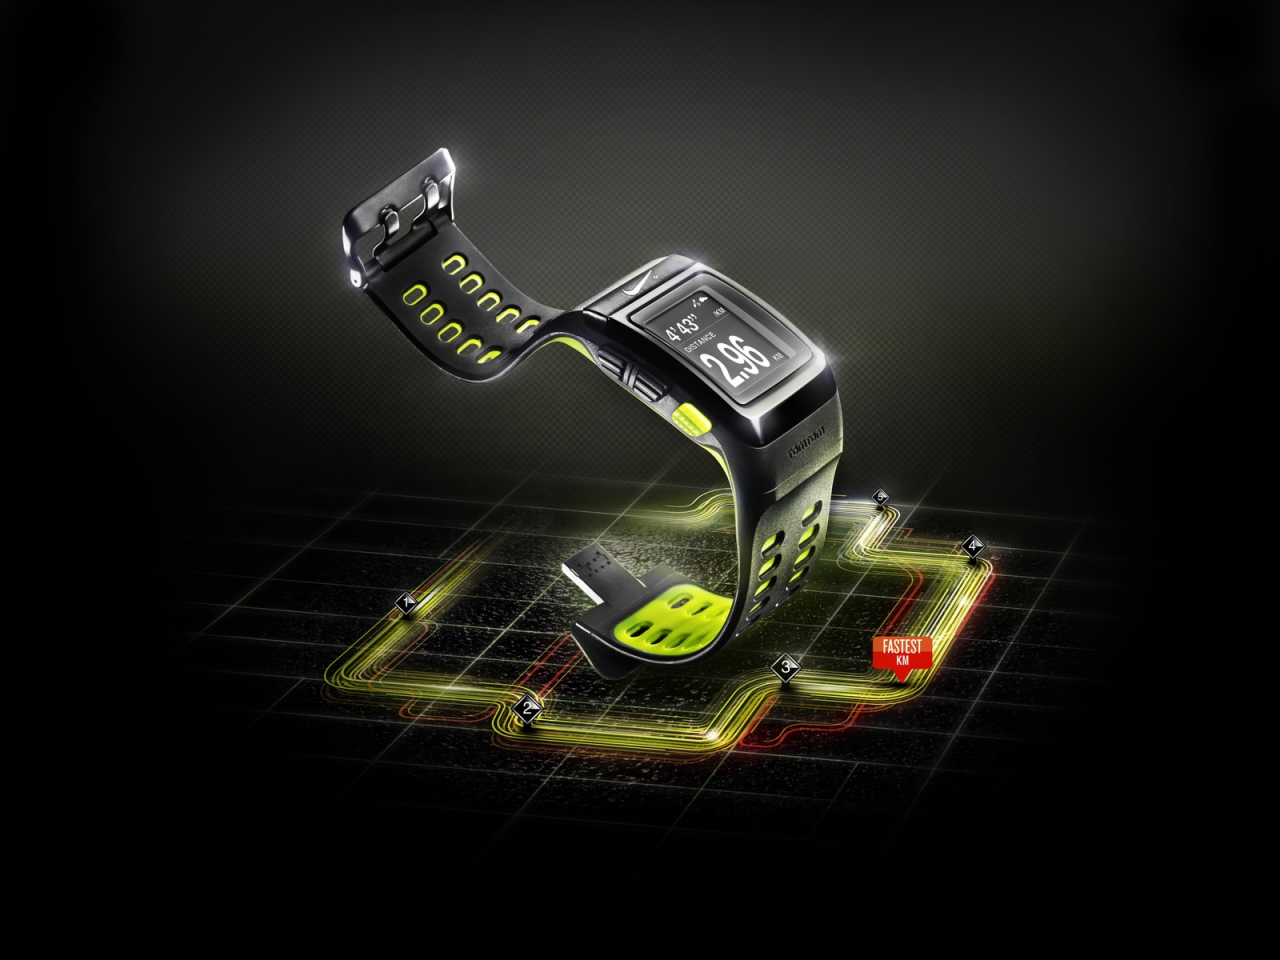 Nike TomTom Navigation for 1280 x 960 resolution